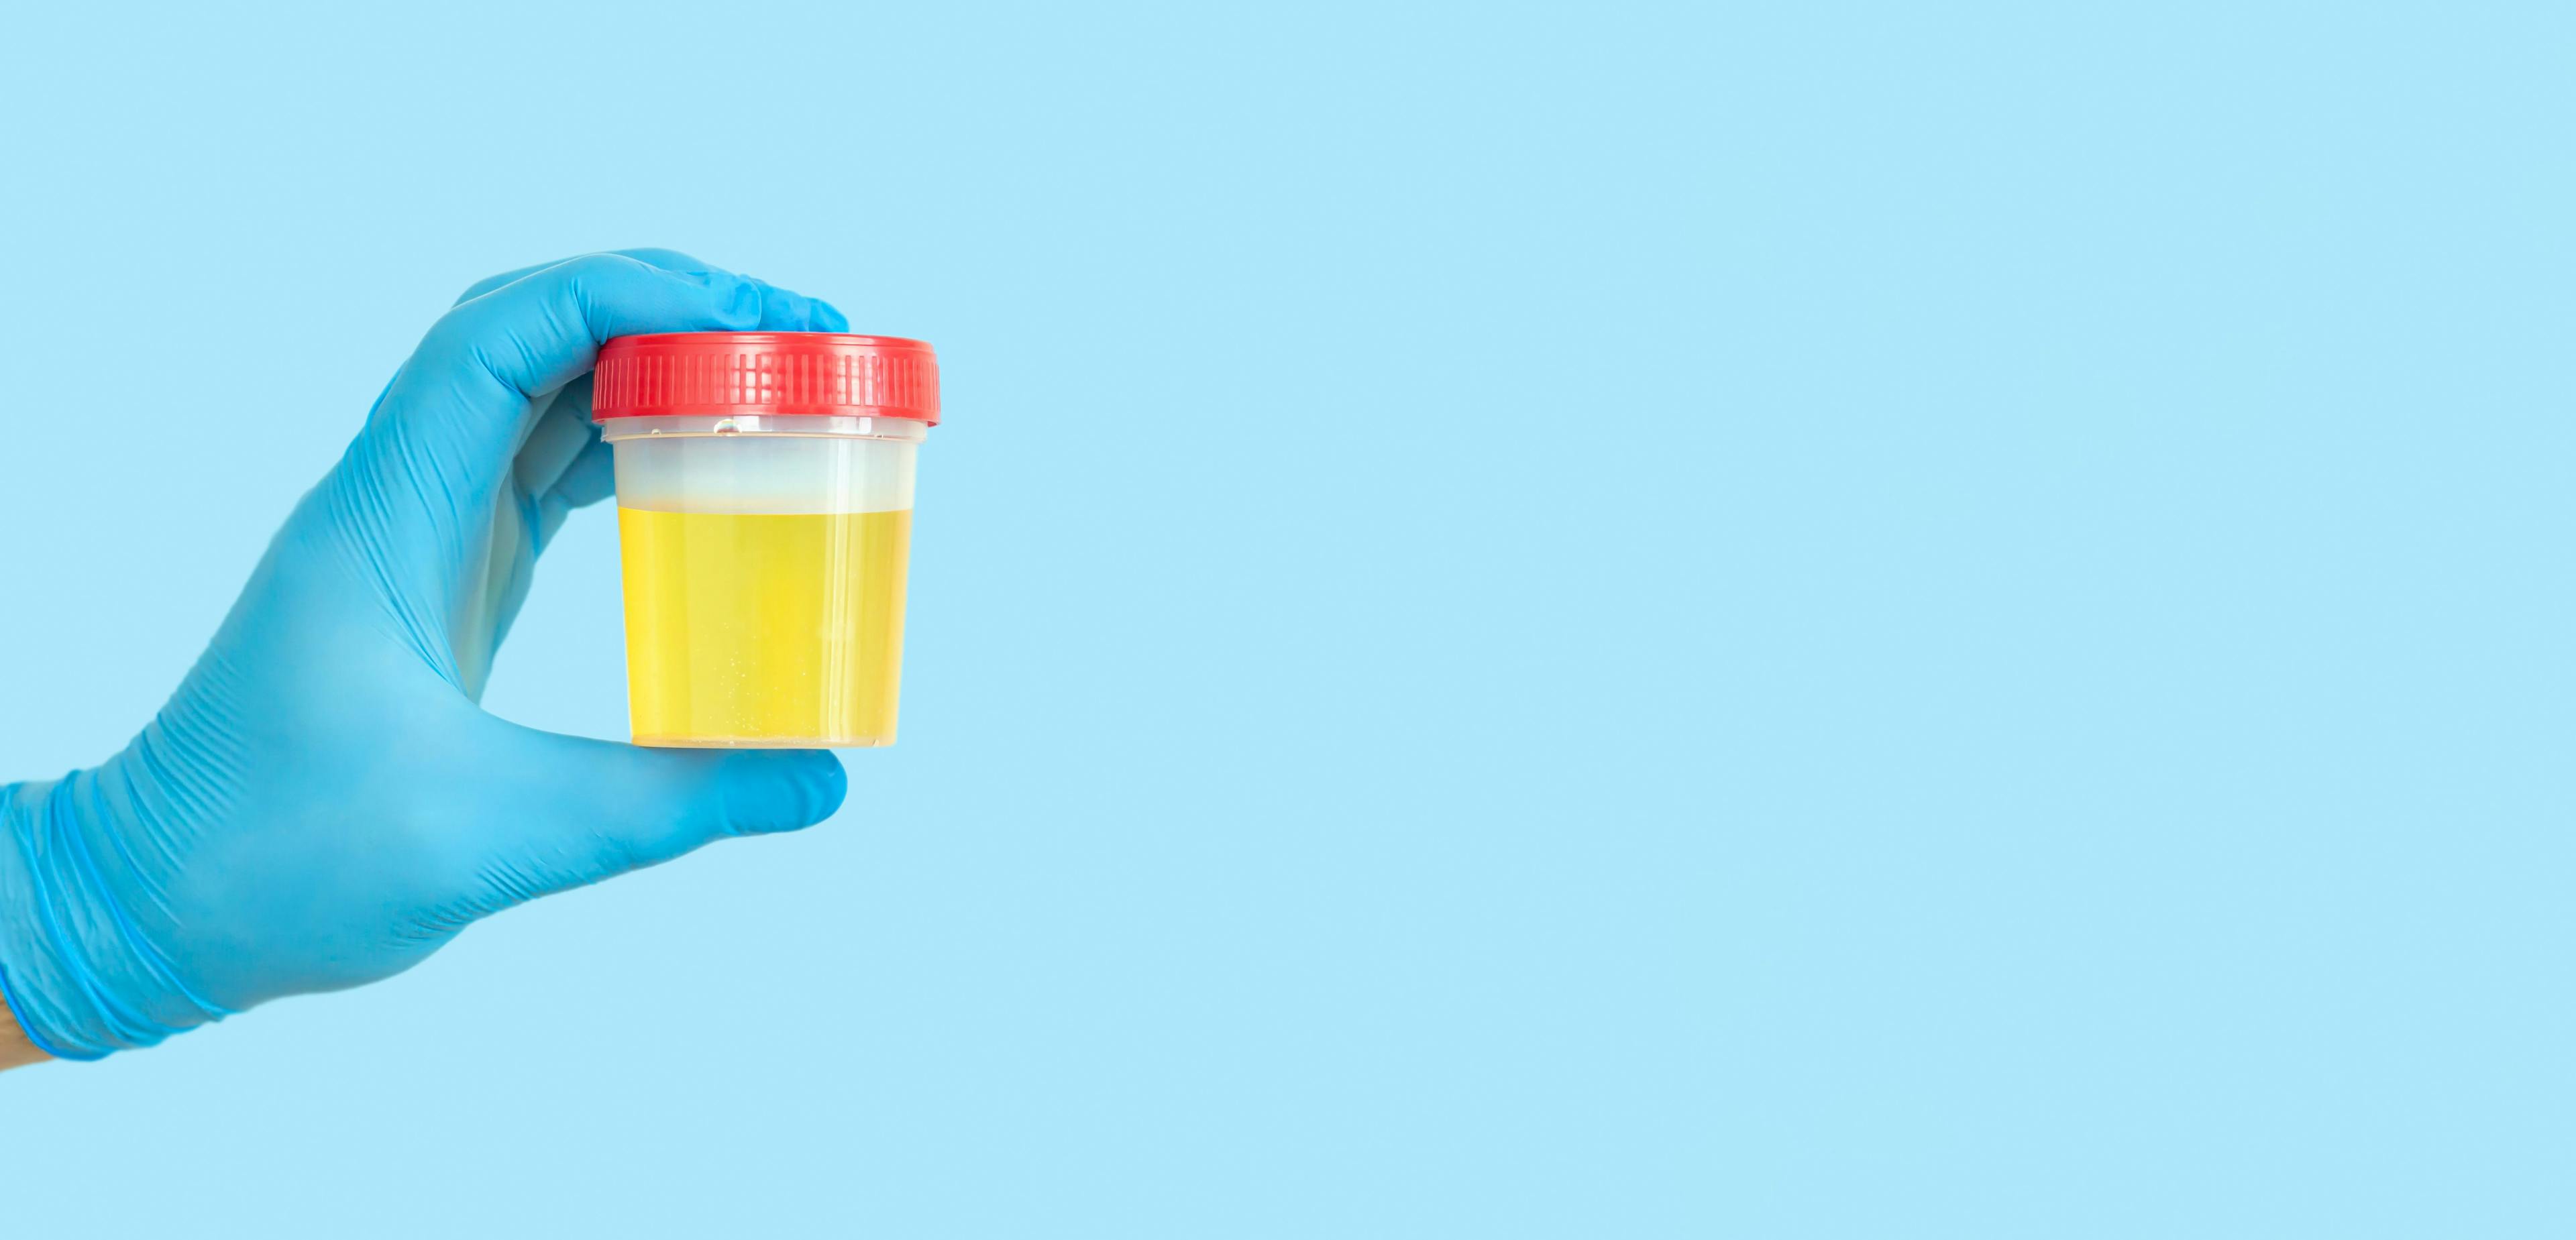 Hand holding urine sample container for medical urinalysis | Image Credit: © Дмитрий Сидор - stock.adobe.com